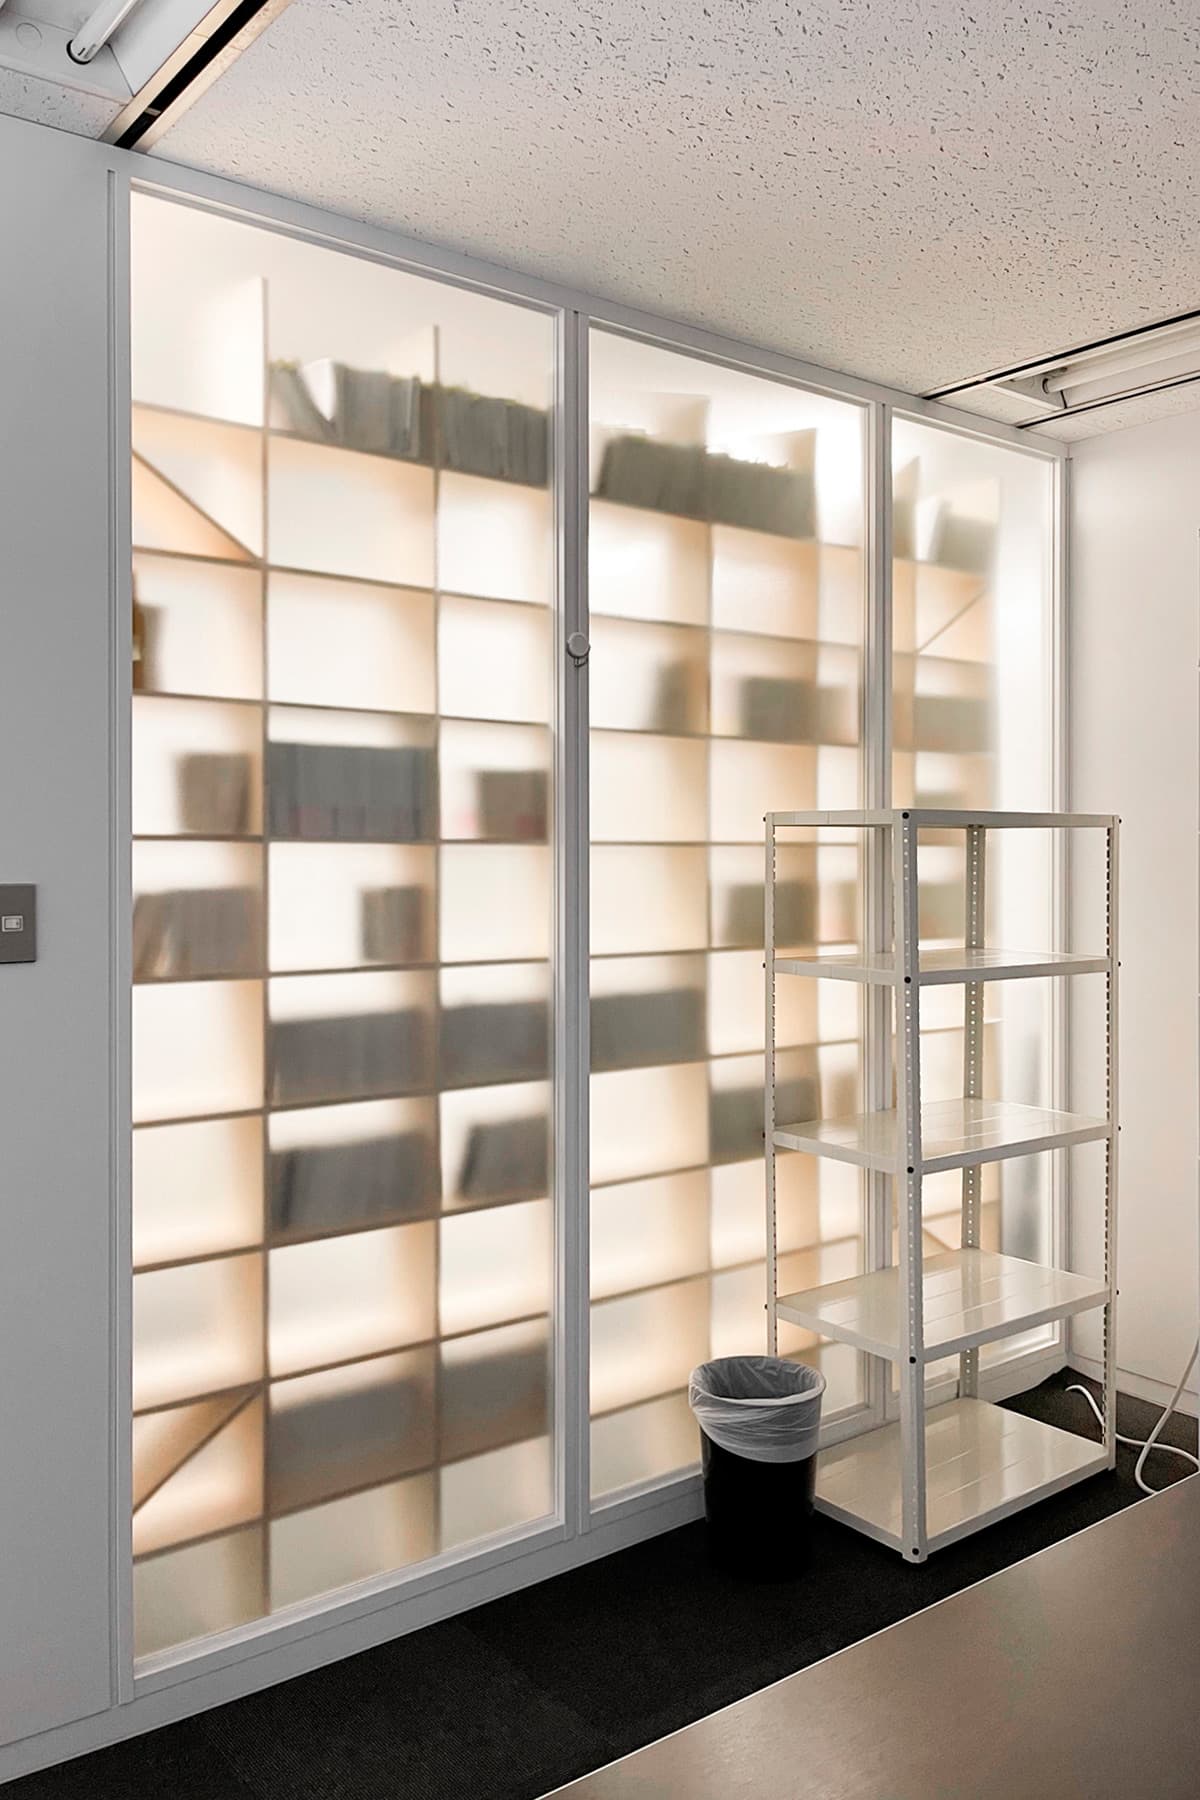 [No.577] 出版会社のオフィスに | 壁一面のA5判本棚 奥行180mm / Shelf  | マルゲリータお客様の使用例 シンプル スタイリッシュ おしゃれ 壁面収納 木製 オフィス家具